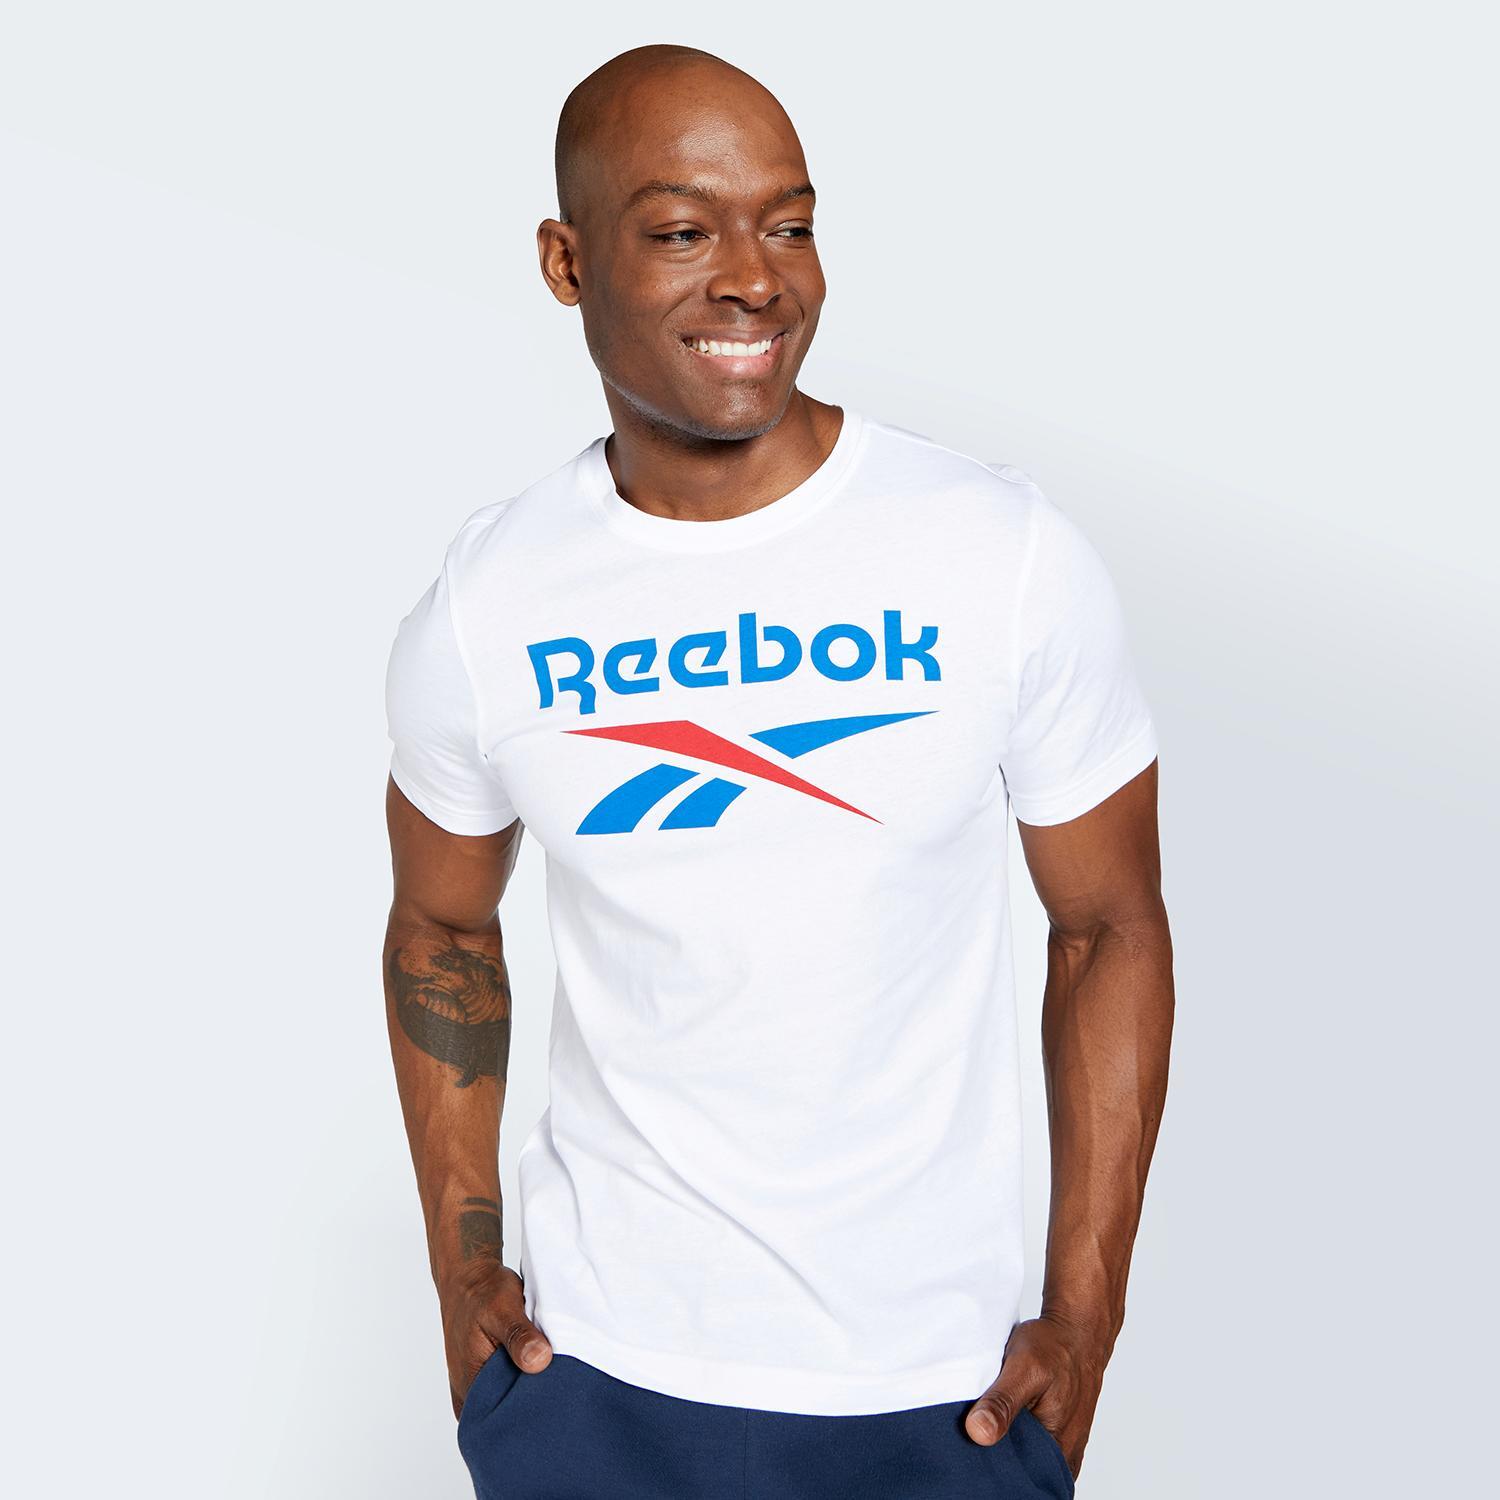 Comprar Productos Camiseta Reebok Hombre Outlet Online